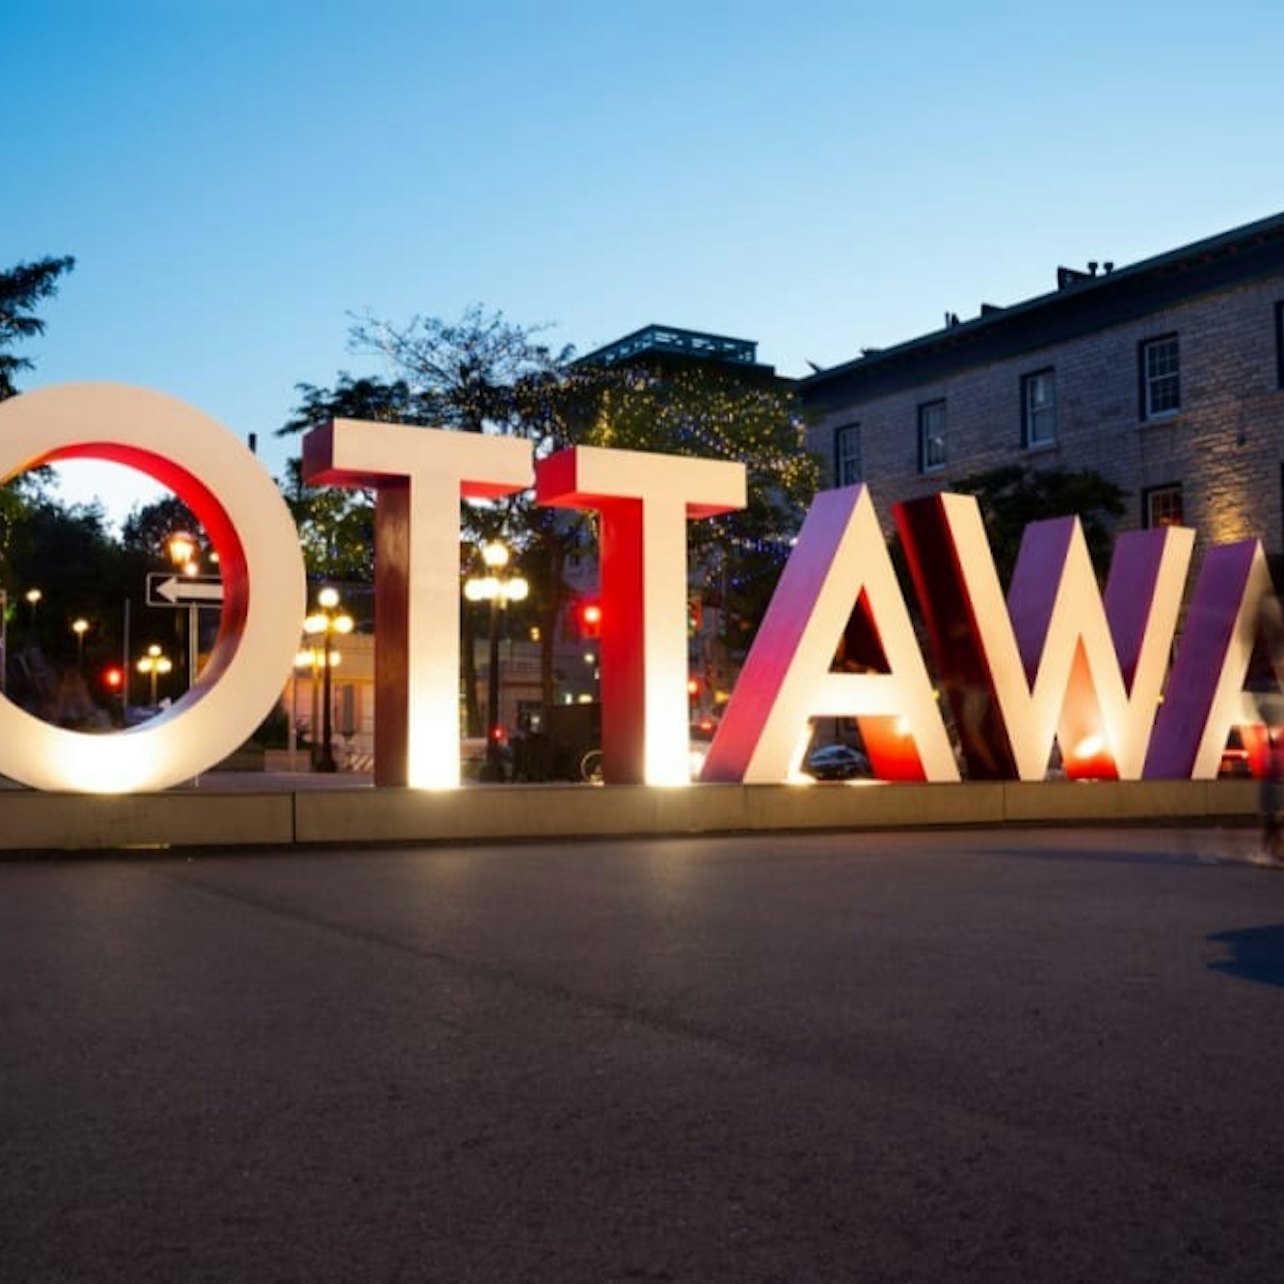 Ottawa Night Tour + Parliament Hill Light Show - Accommodations in Ottawa